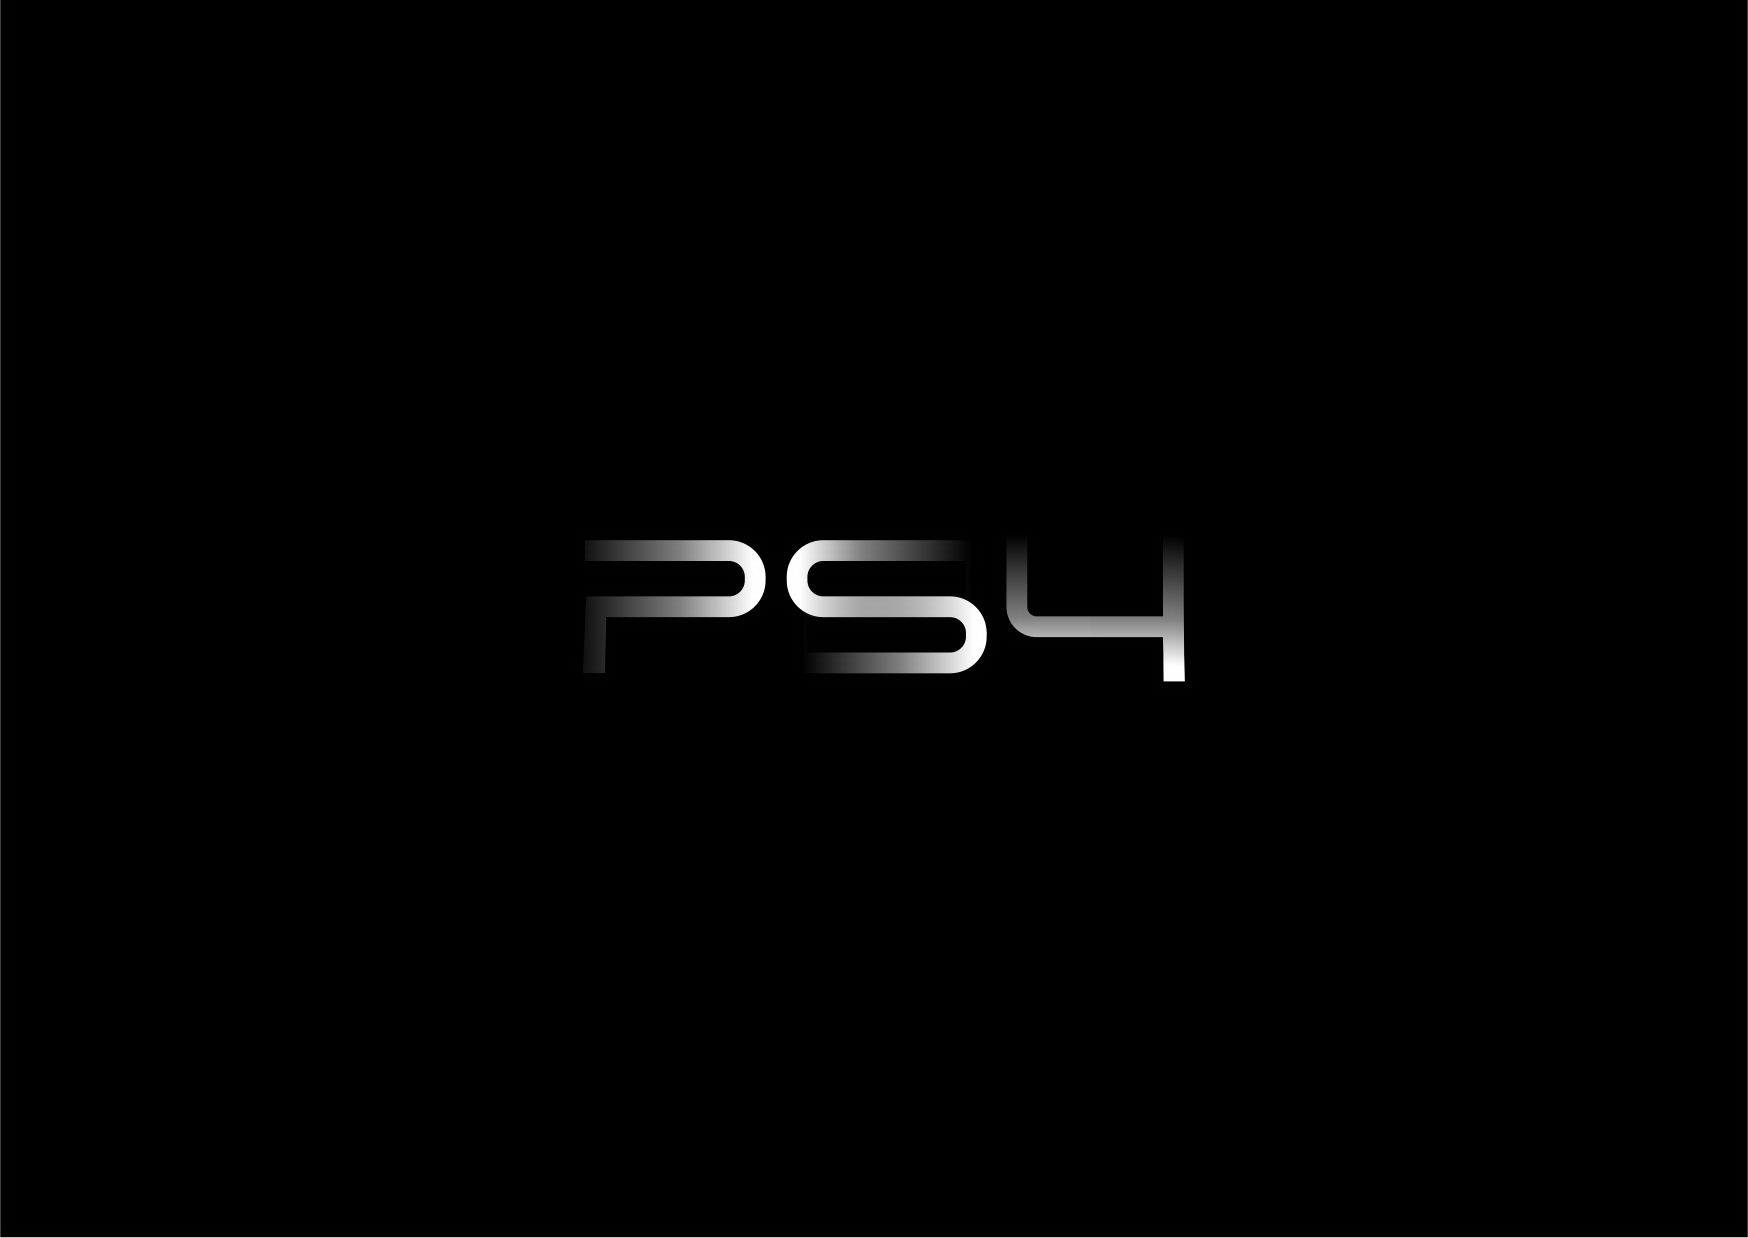 Logo, Ps4, Game Pad, Digital Art, Dark Background wallpaper,logo ...